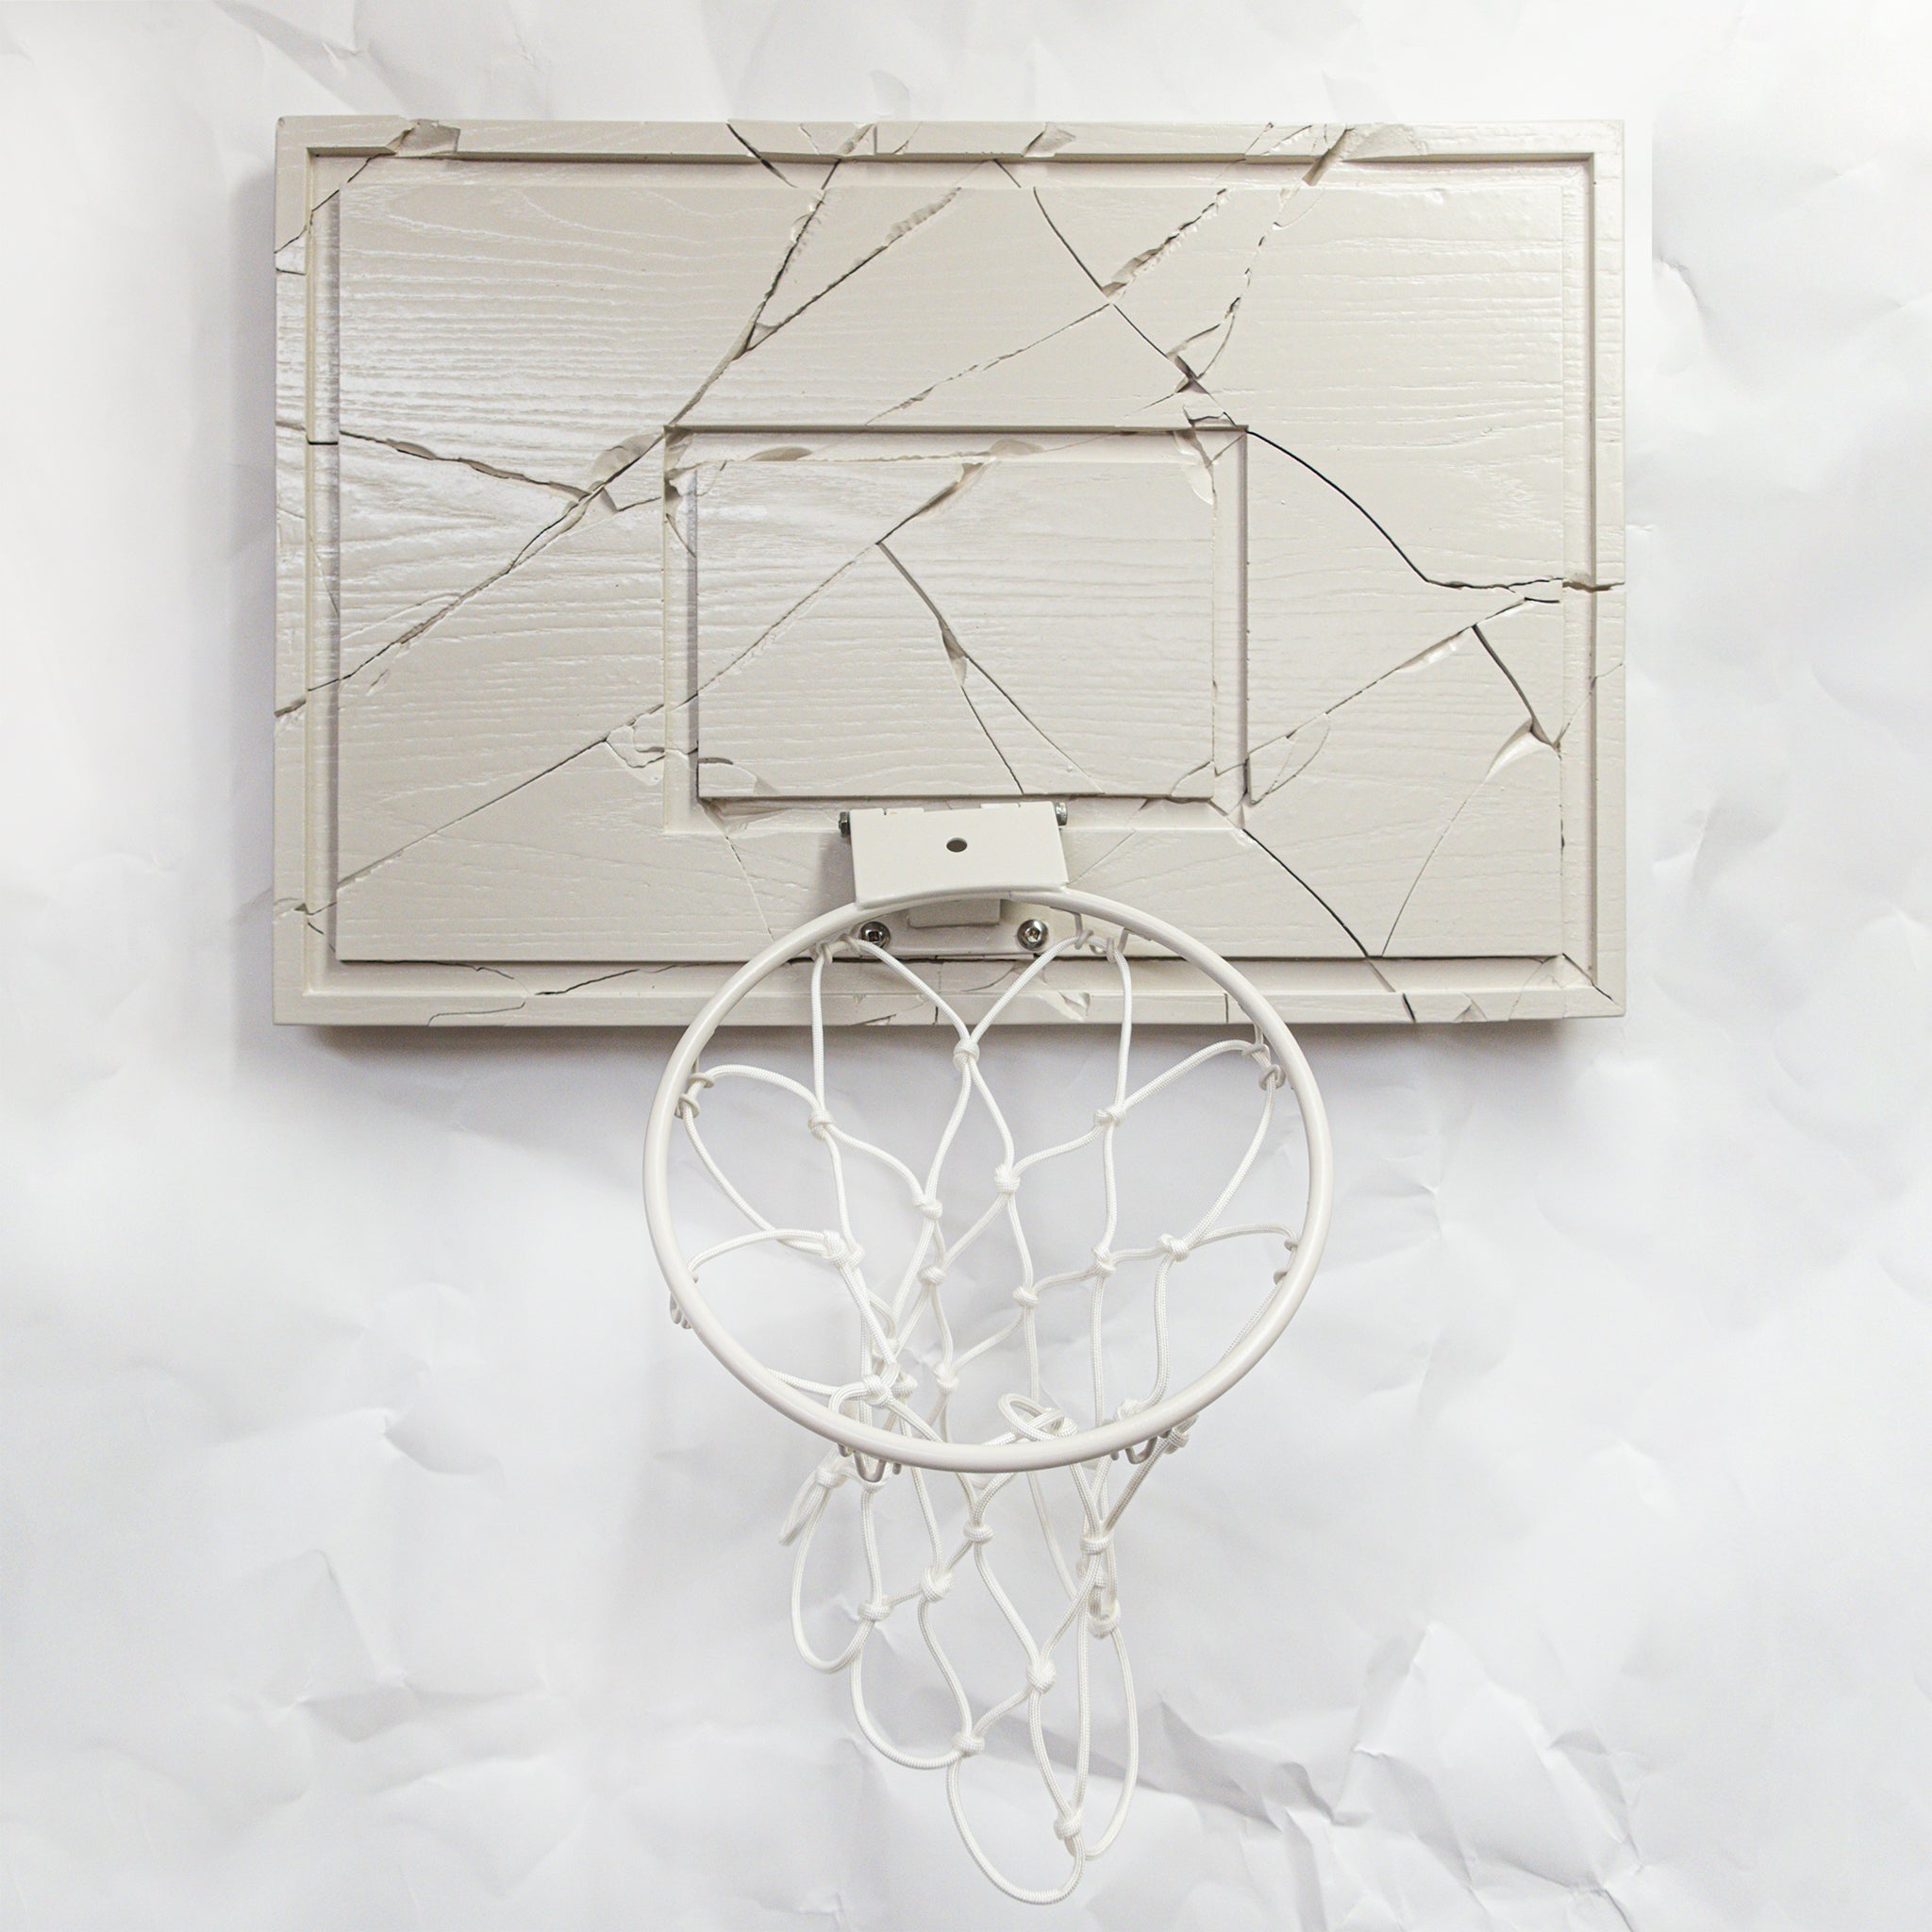 Shattered Mini Basketball Hoop